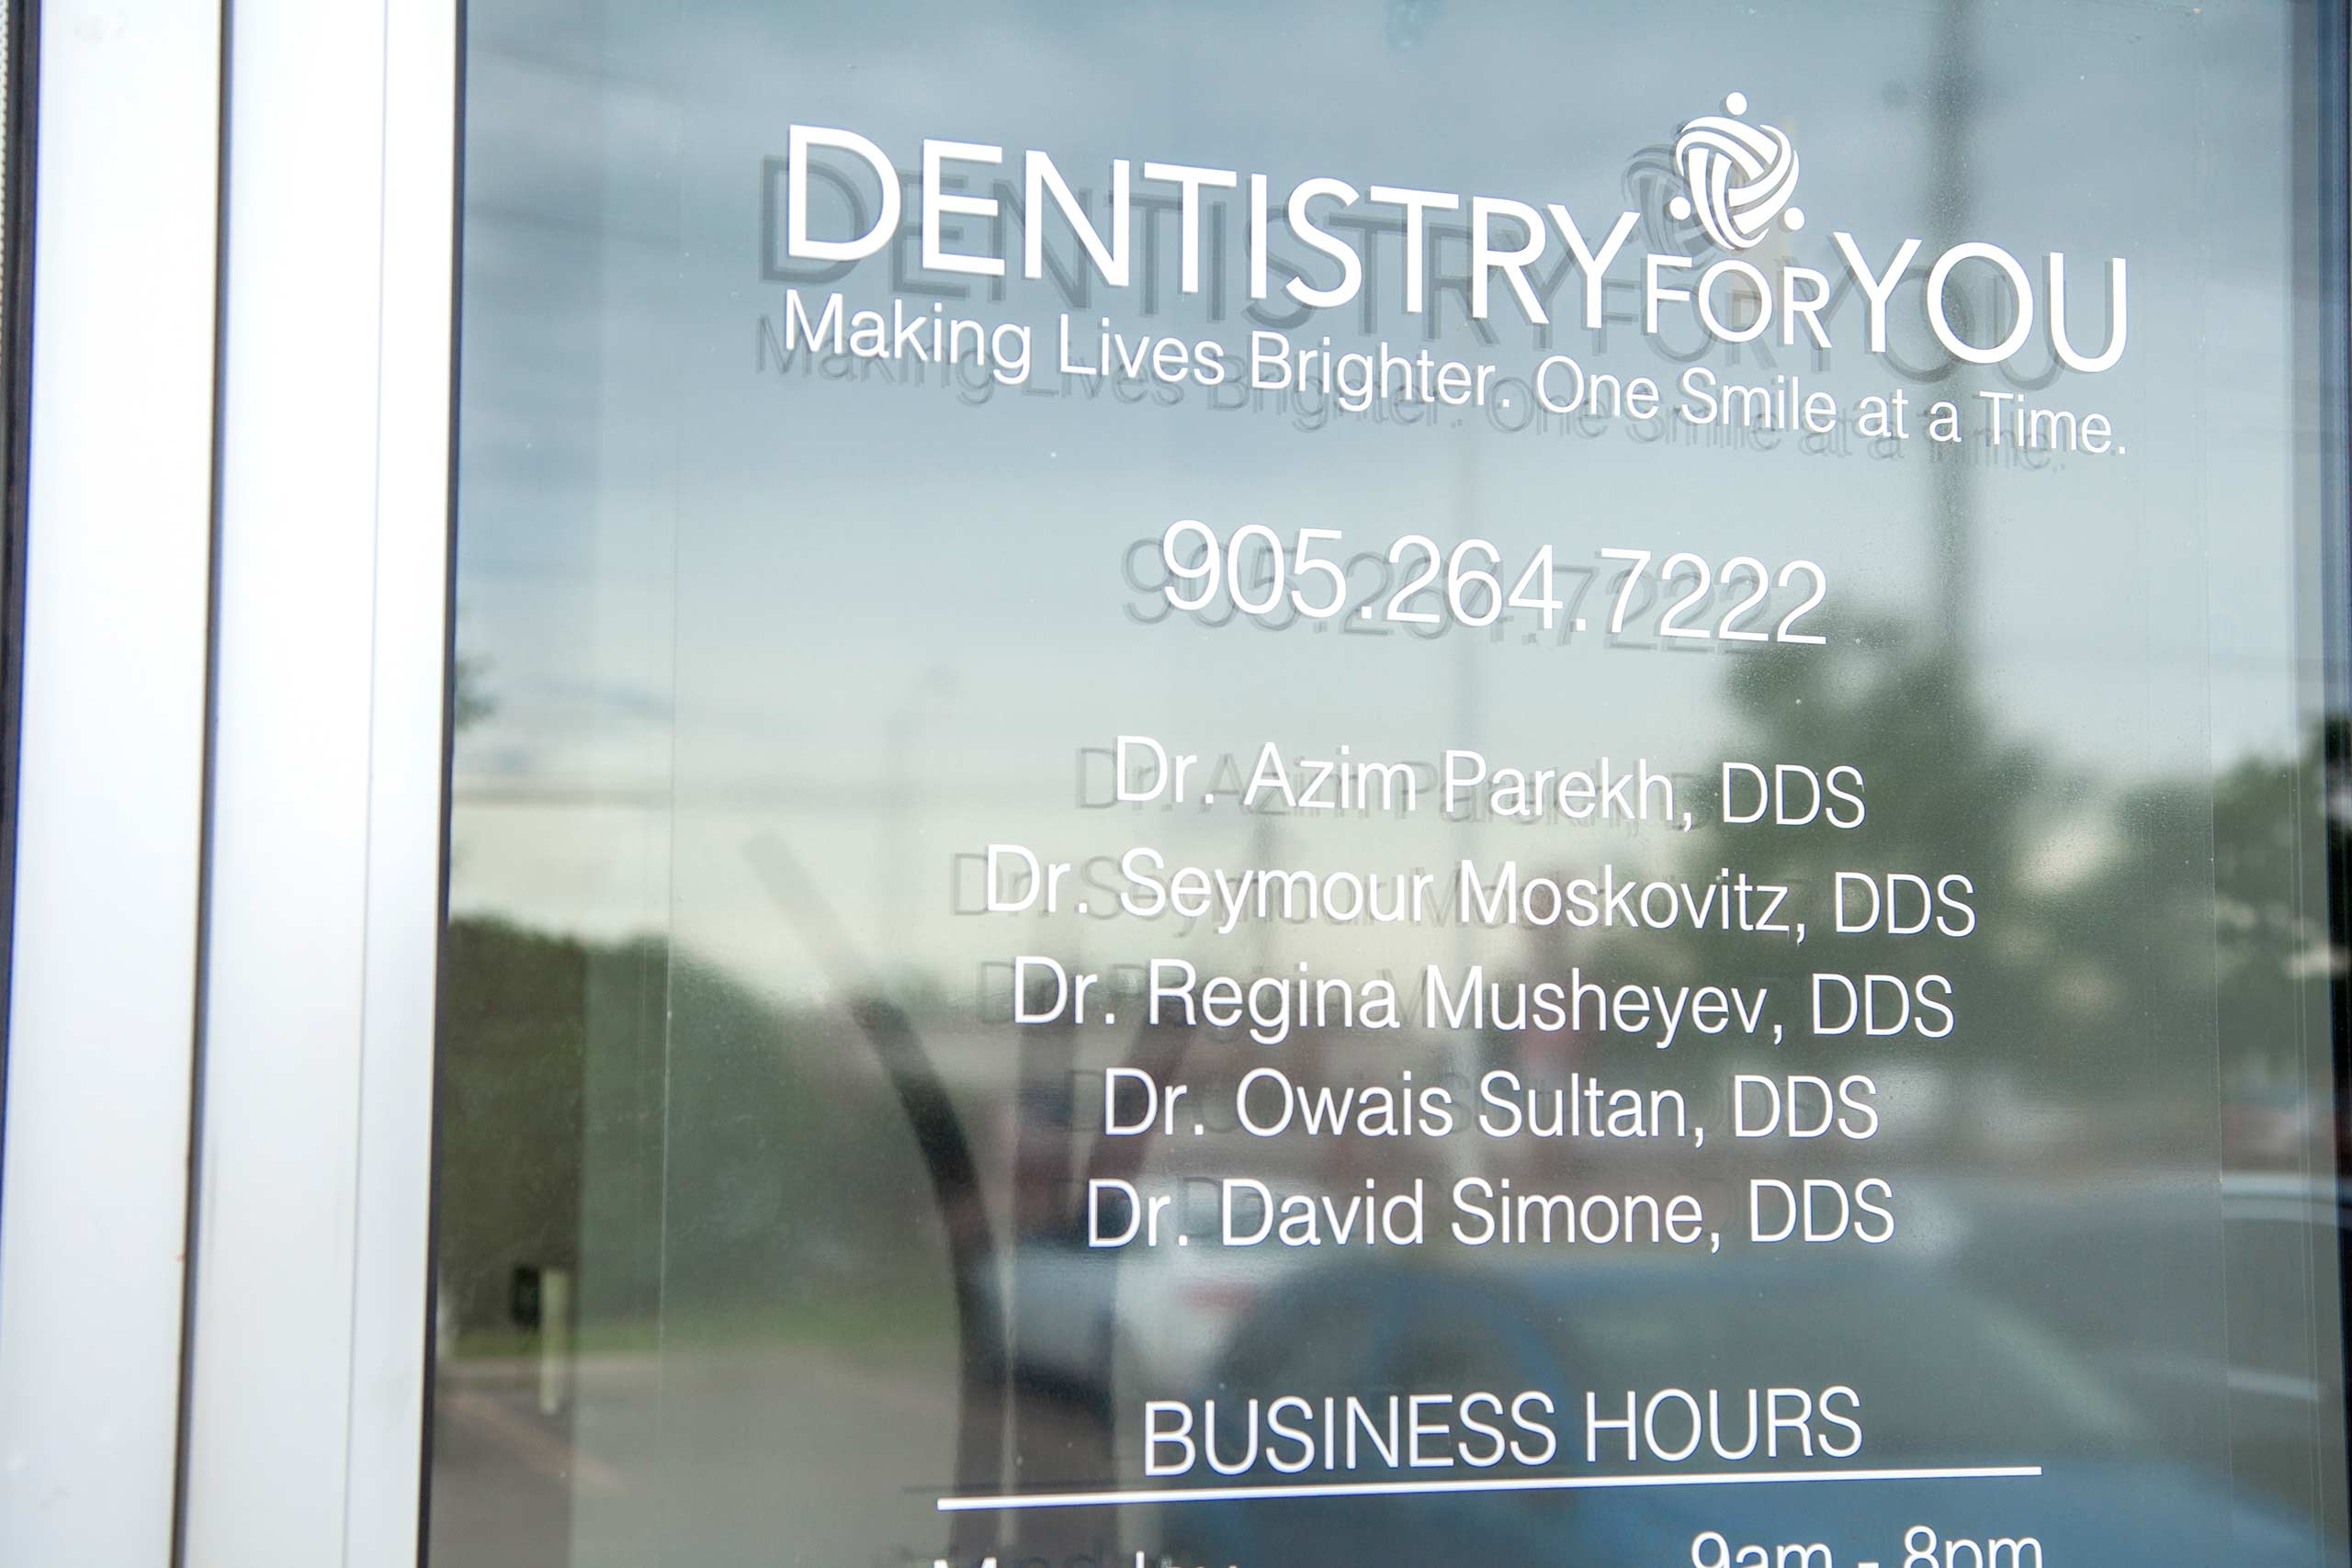 Woodbridge Dental Hours Dentistry For You Dentistry For You